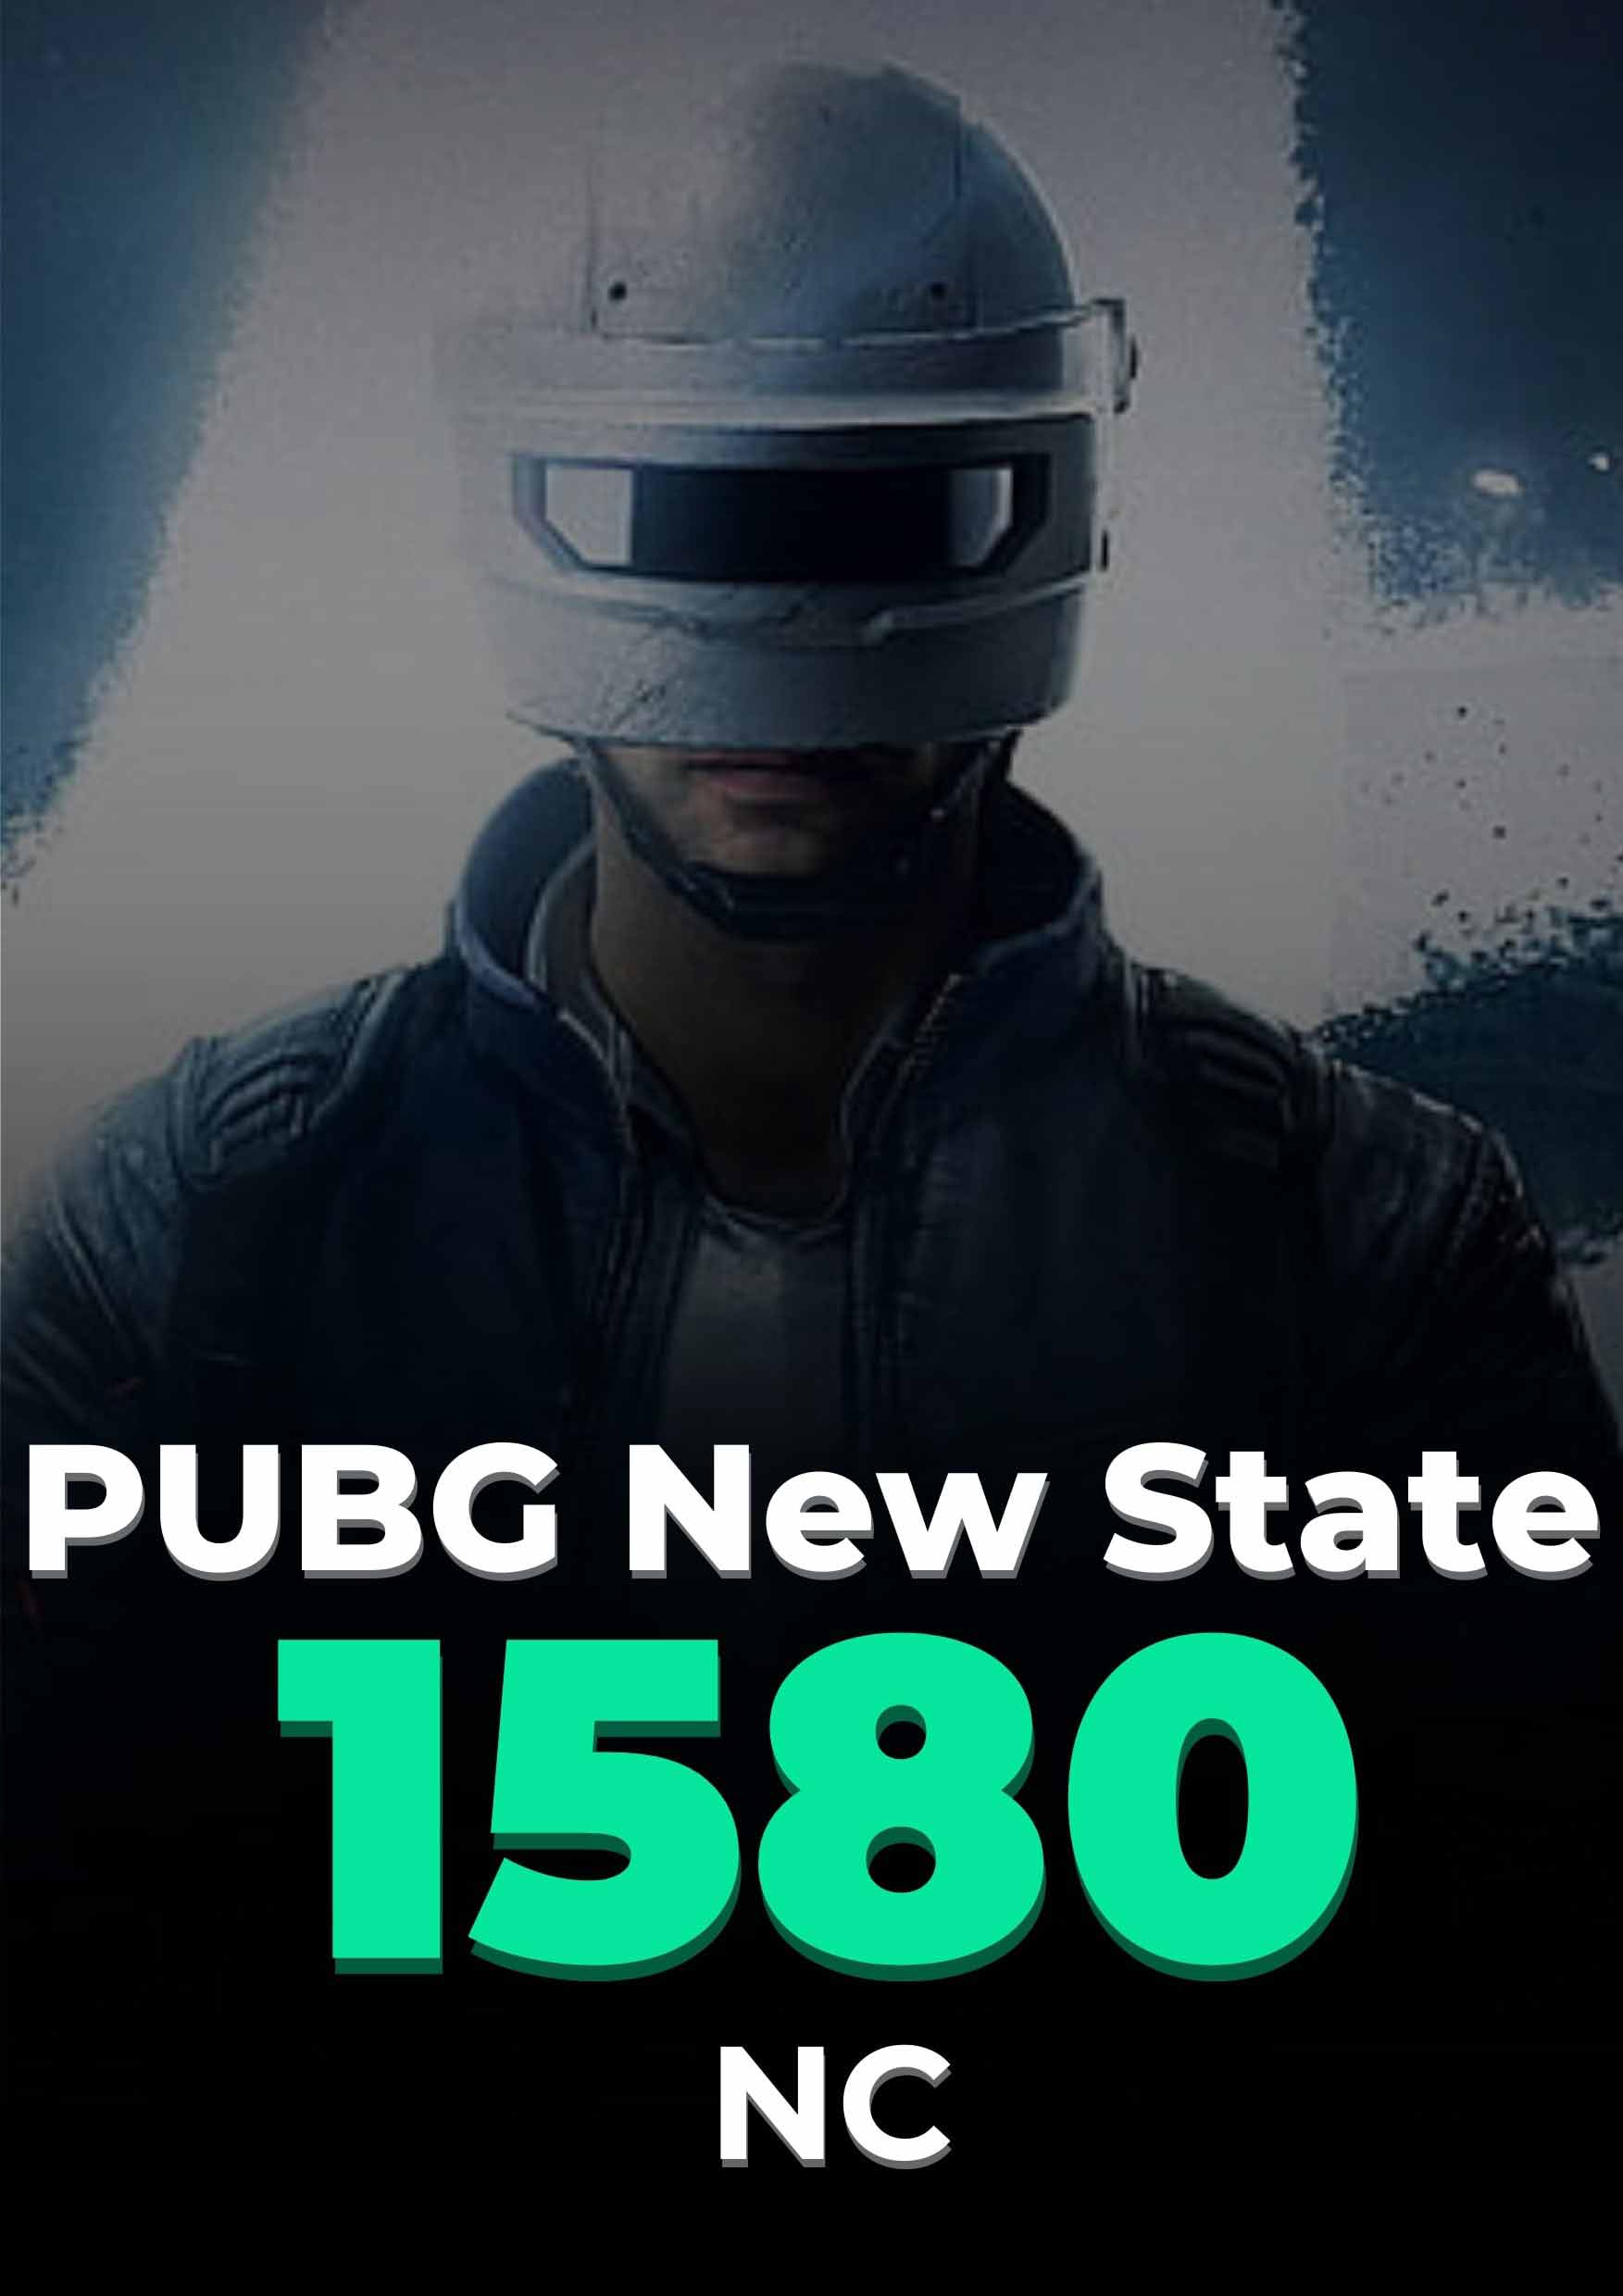 Pubg New State 1500 + 80 NC